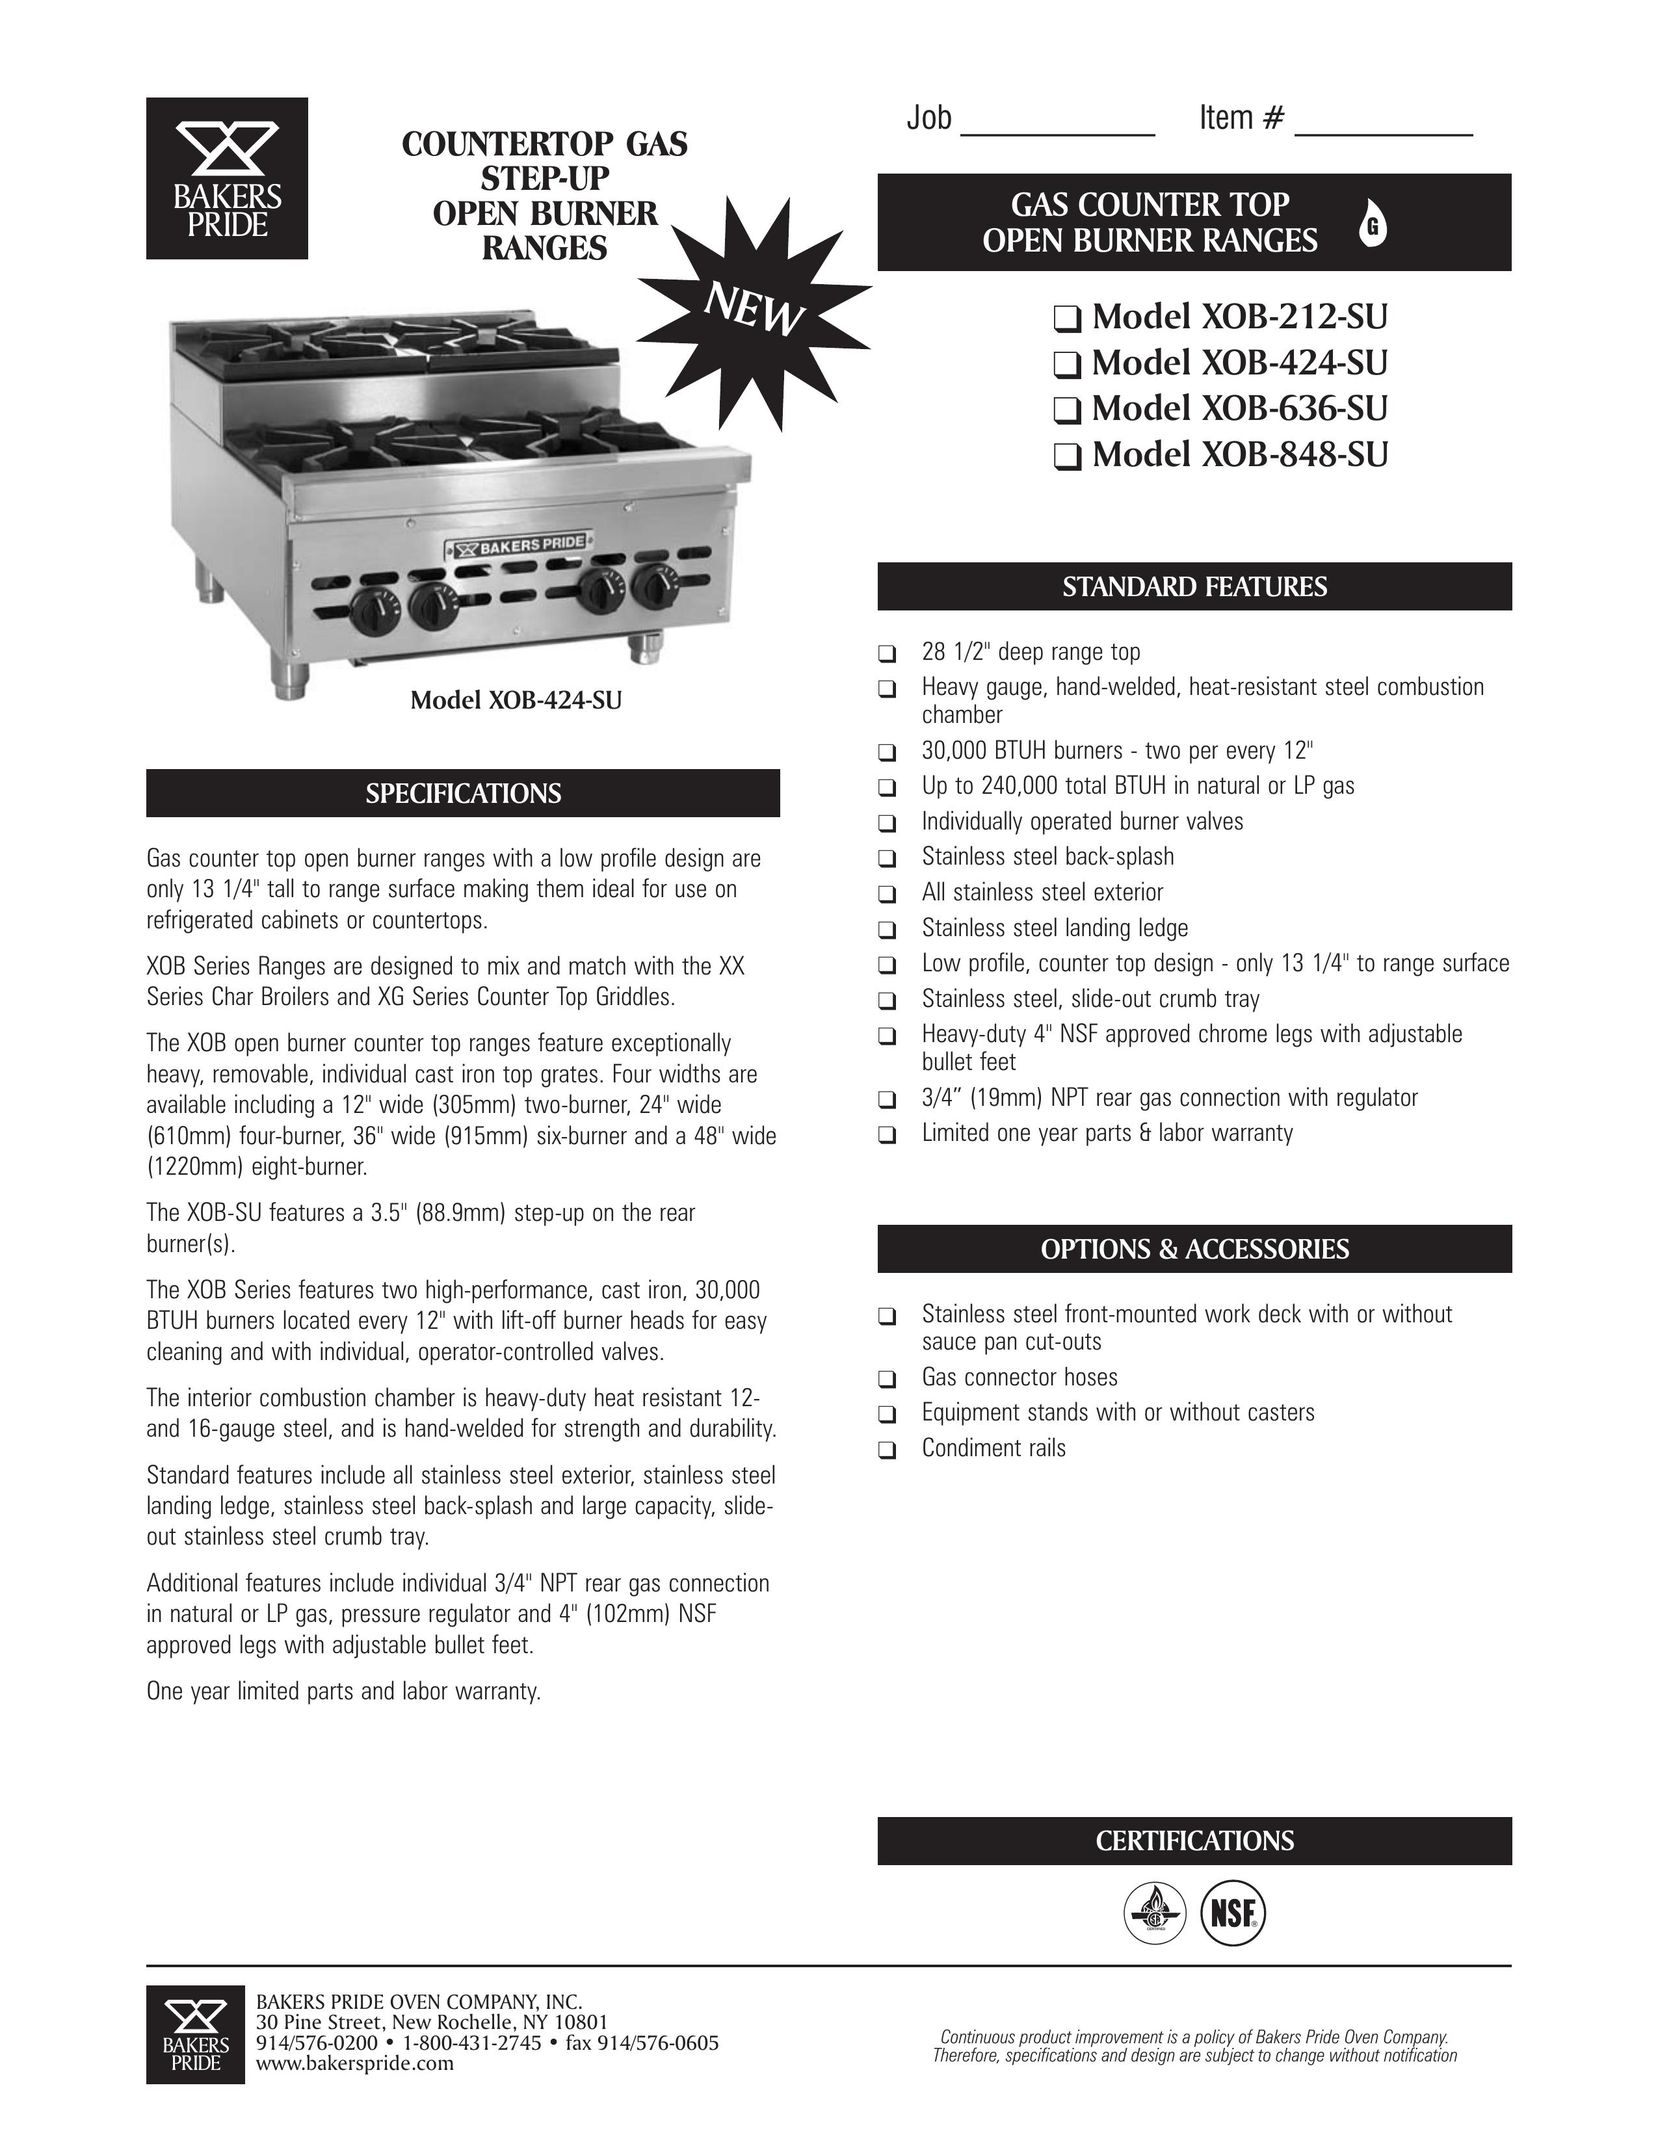 Bakers Pride Oven XOB-848-SU Range User Manual